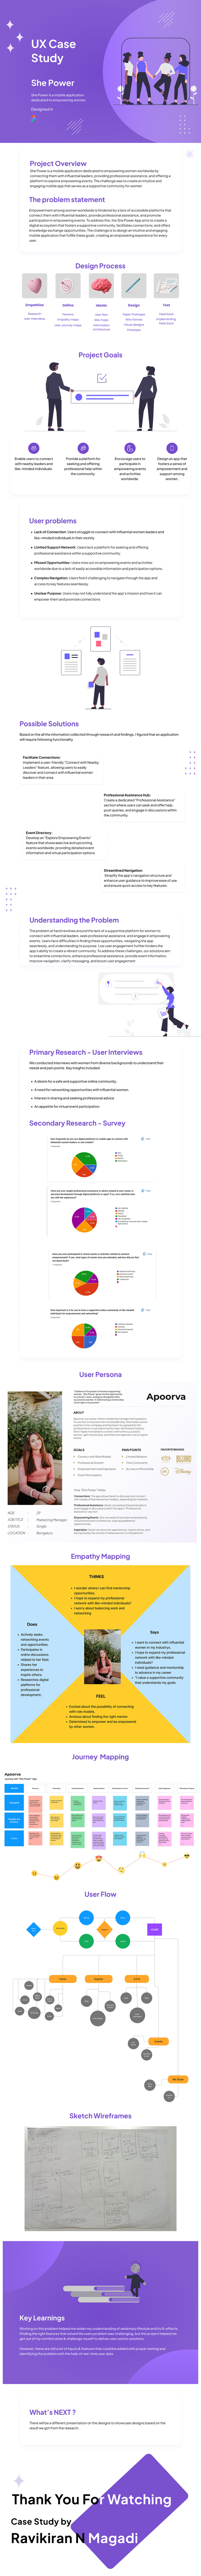 Case Study ux user experience User research UX design women empowerment womenpower shepower uxresearch